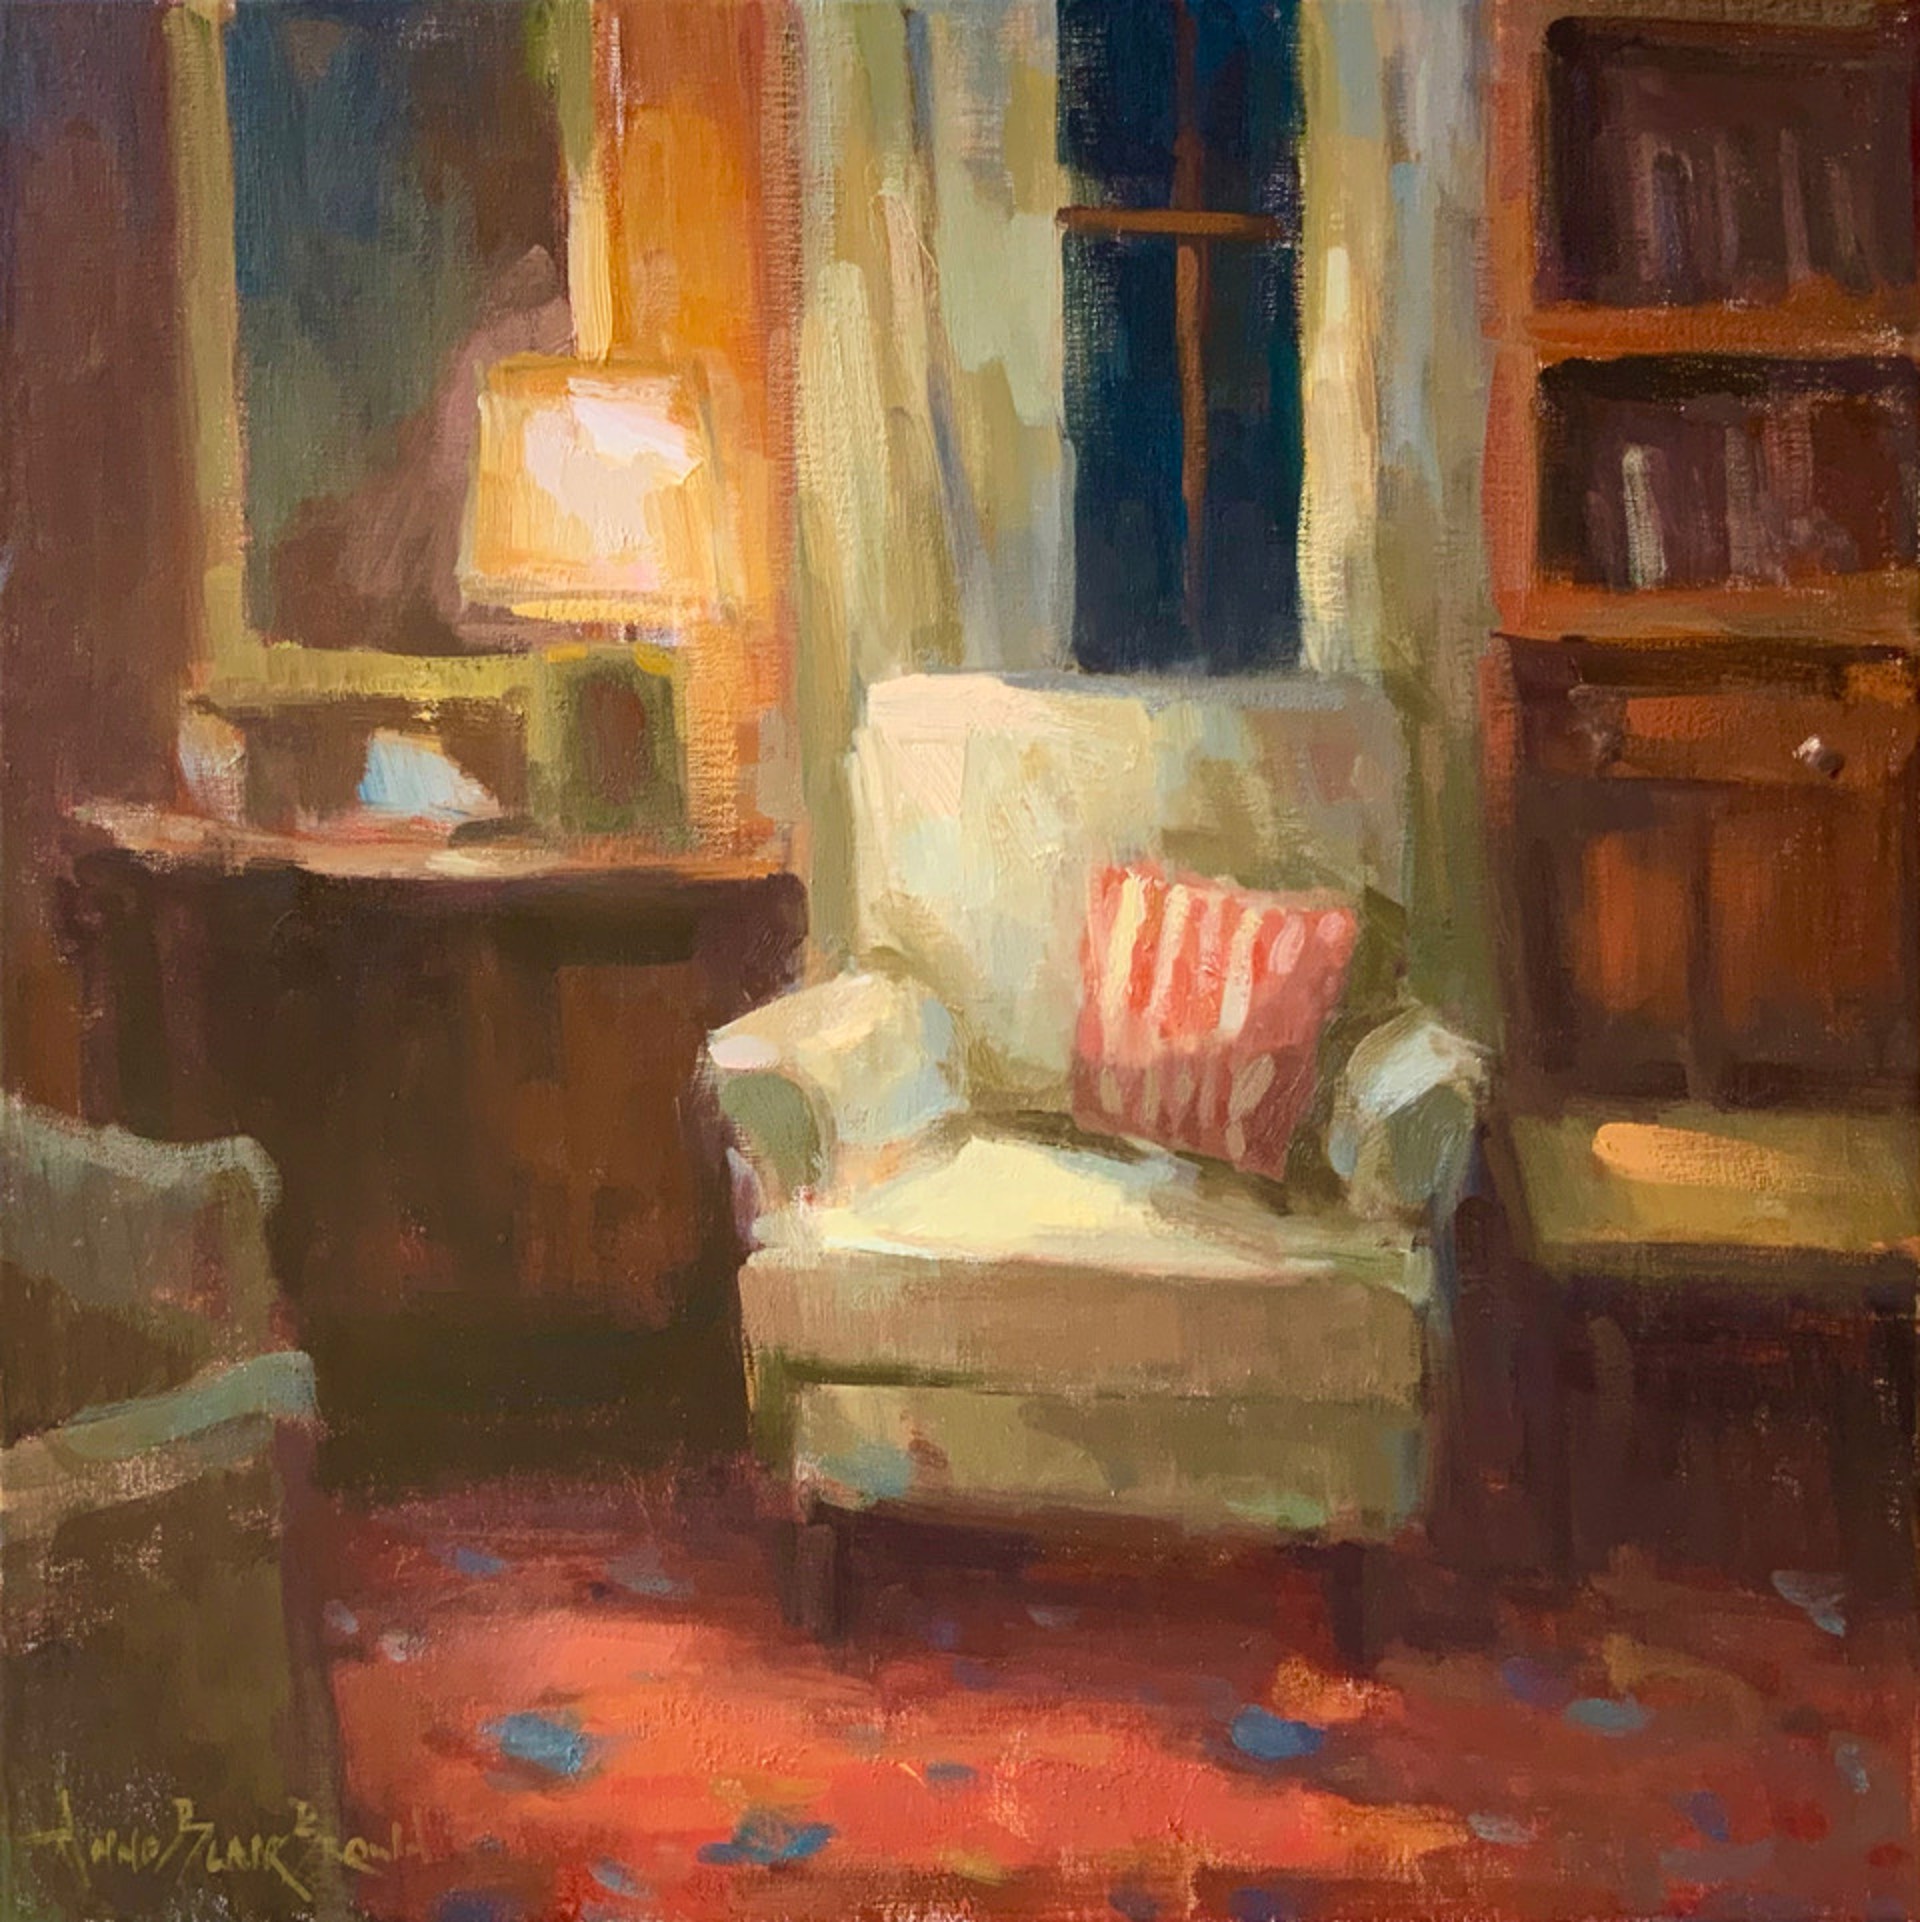 Dorothy's Chair by Anne Blair Brown